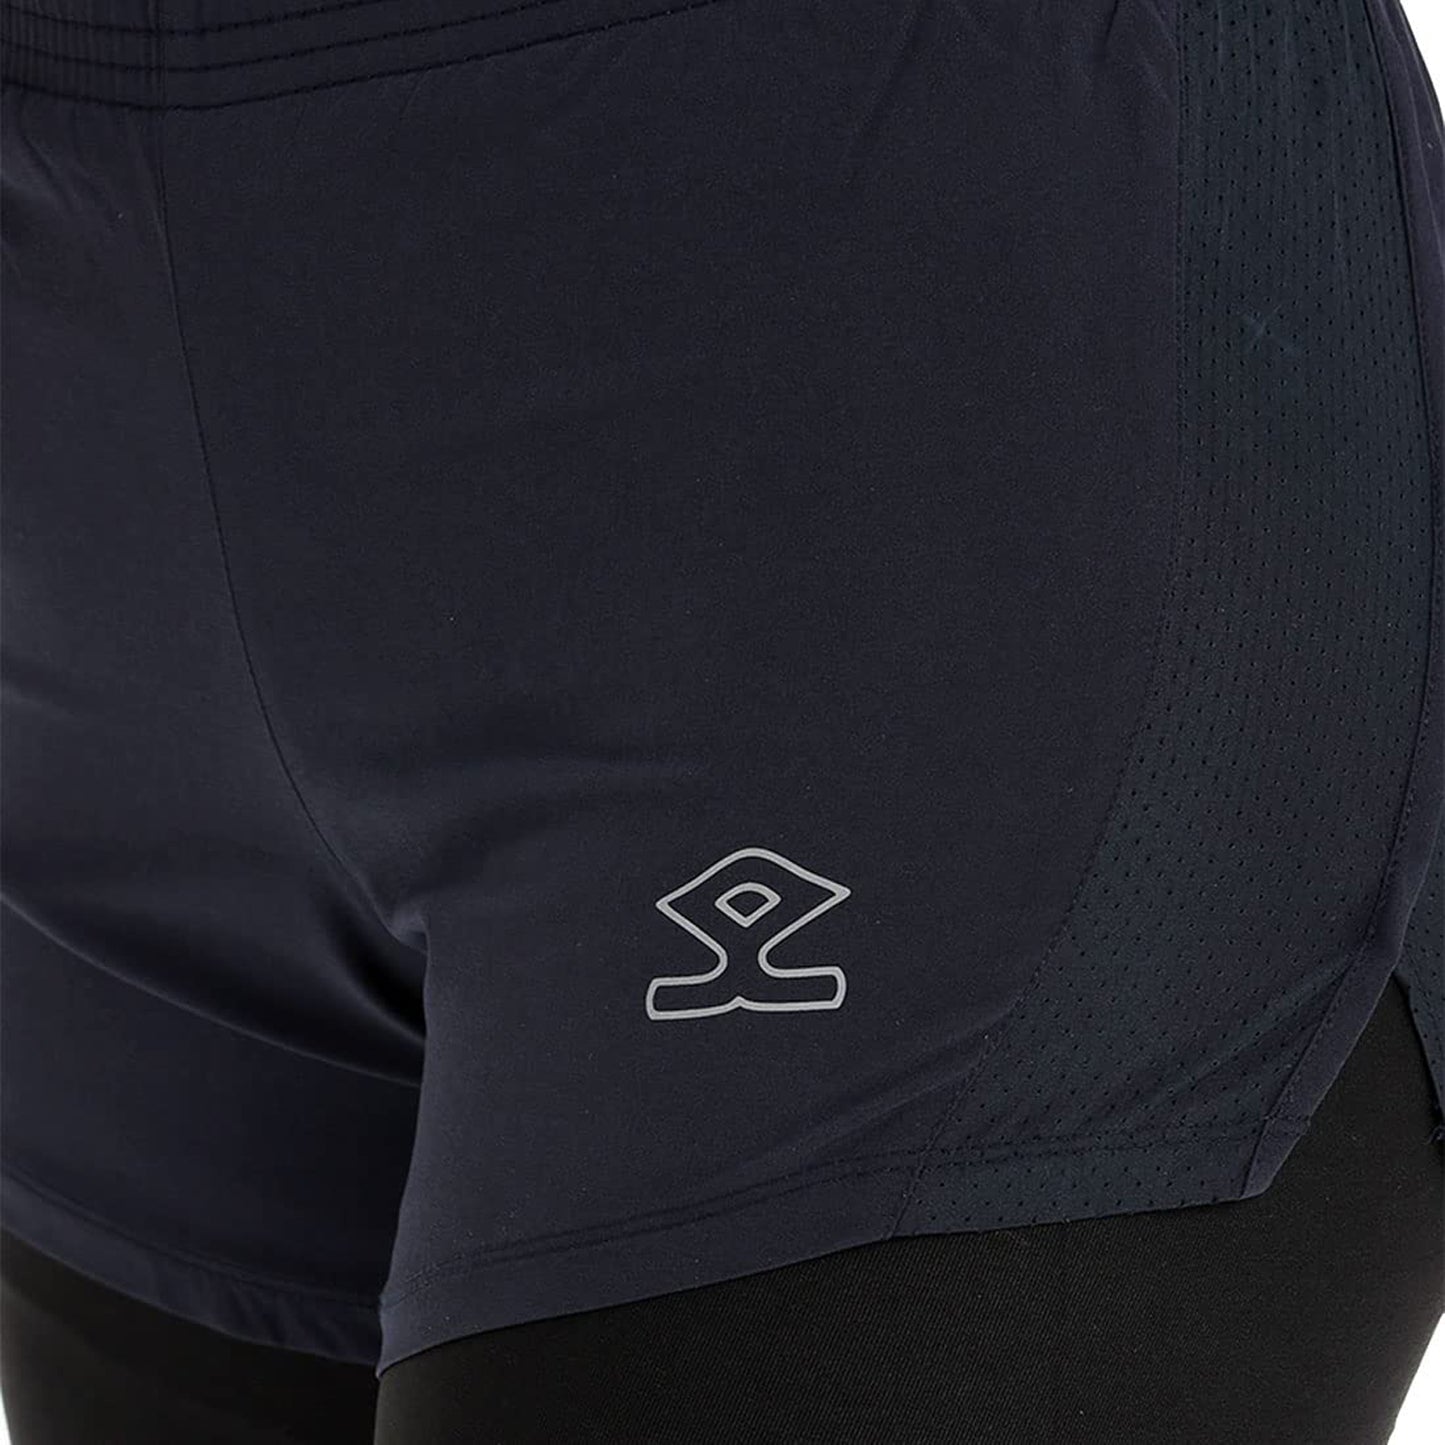 Shrey Pro Double Layer Shorts for Women - Best Price online Prokicksports.com